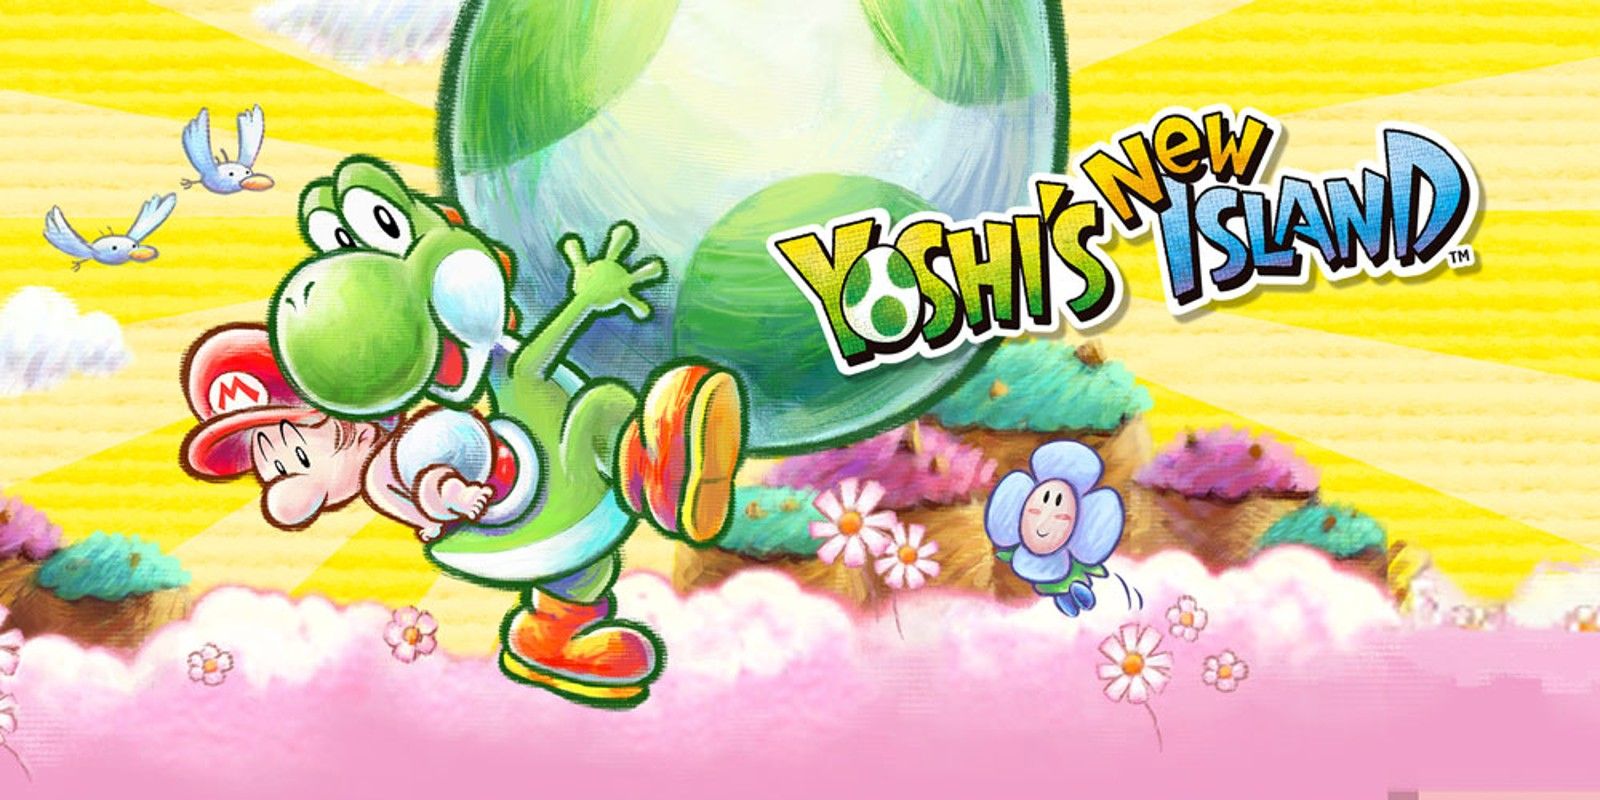 Header image promoting Yoshi's New Island.